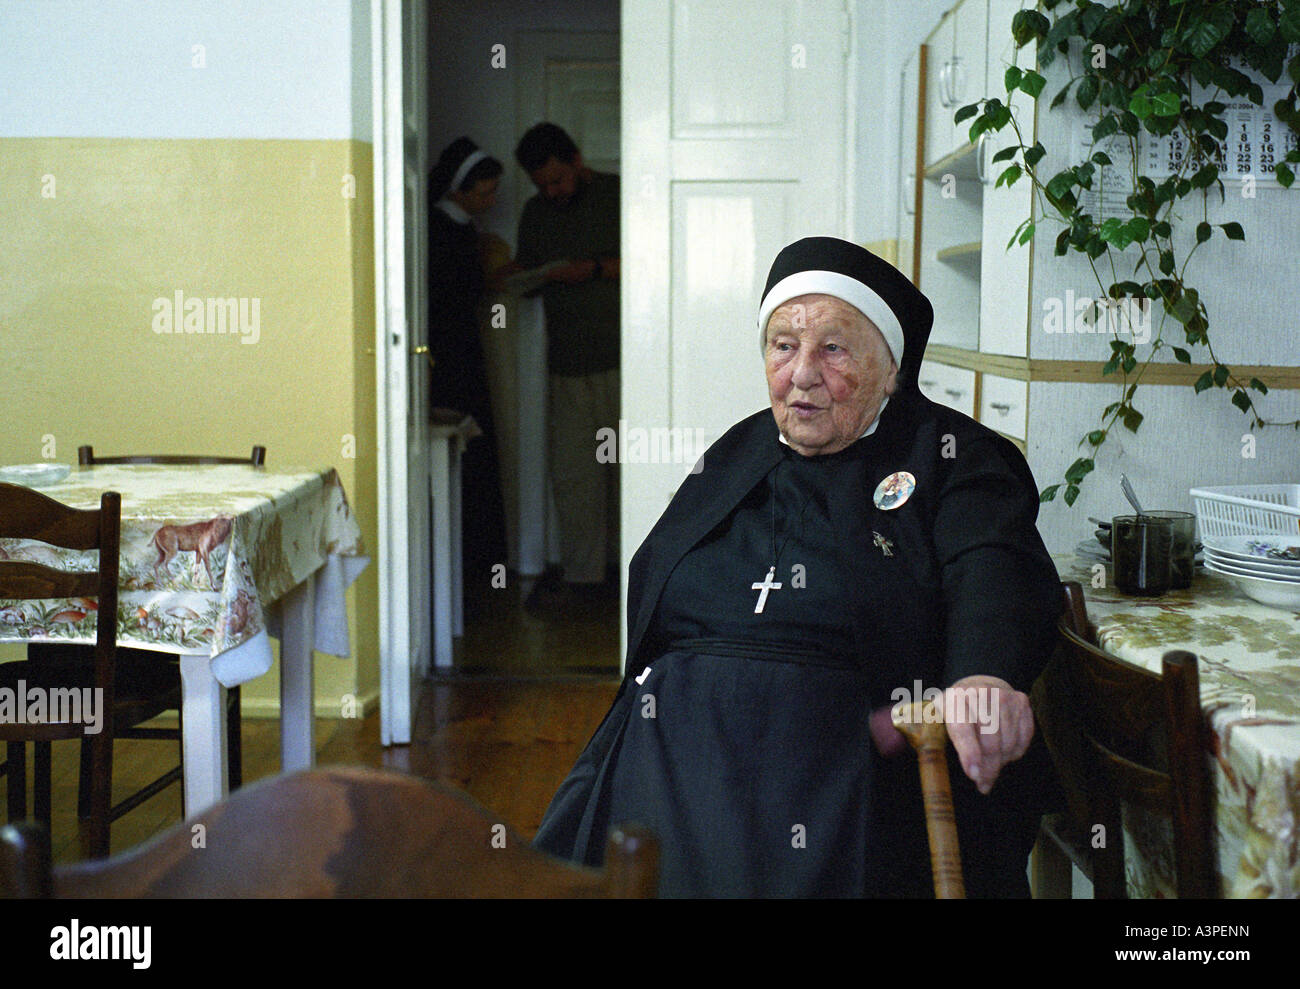 Ältere Nonne sitzen in einem Speisesaal des Klosters in Komancza, Polen Stockfoto